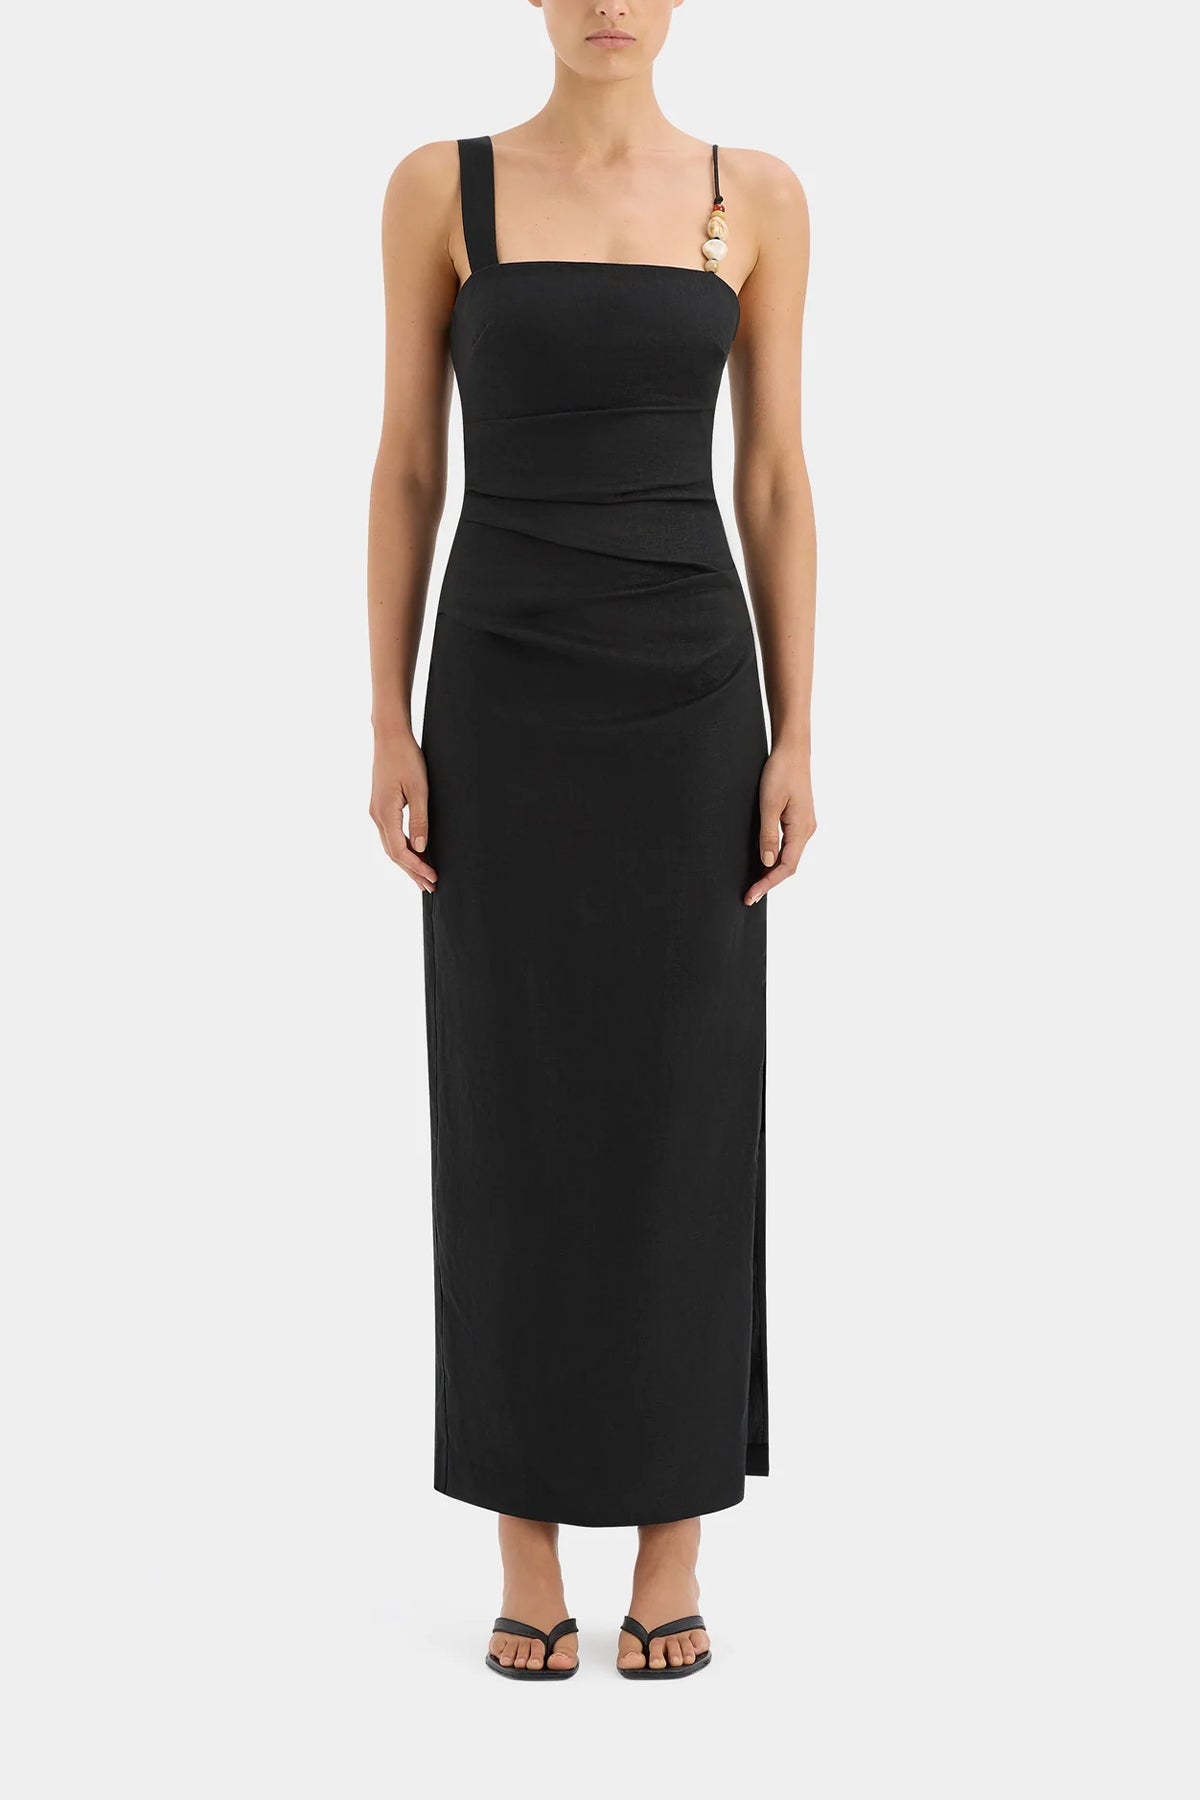 Antonia Beaded Midi Dress in Black - shop-olivia.com